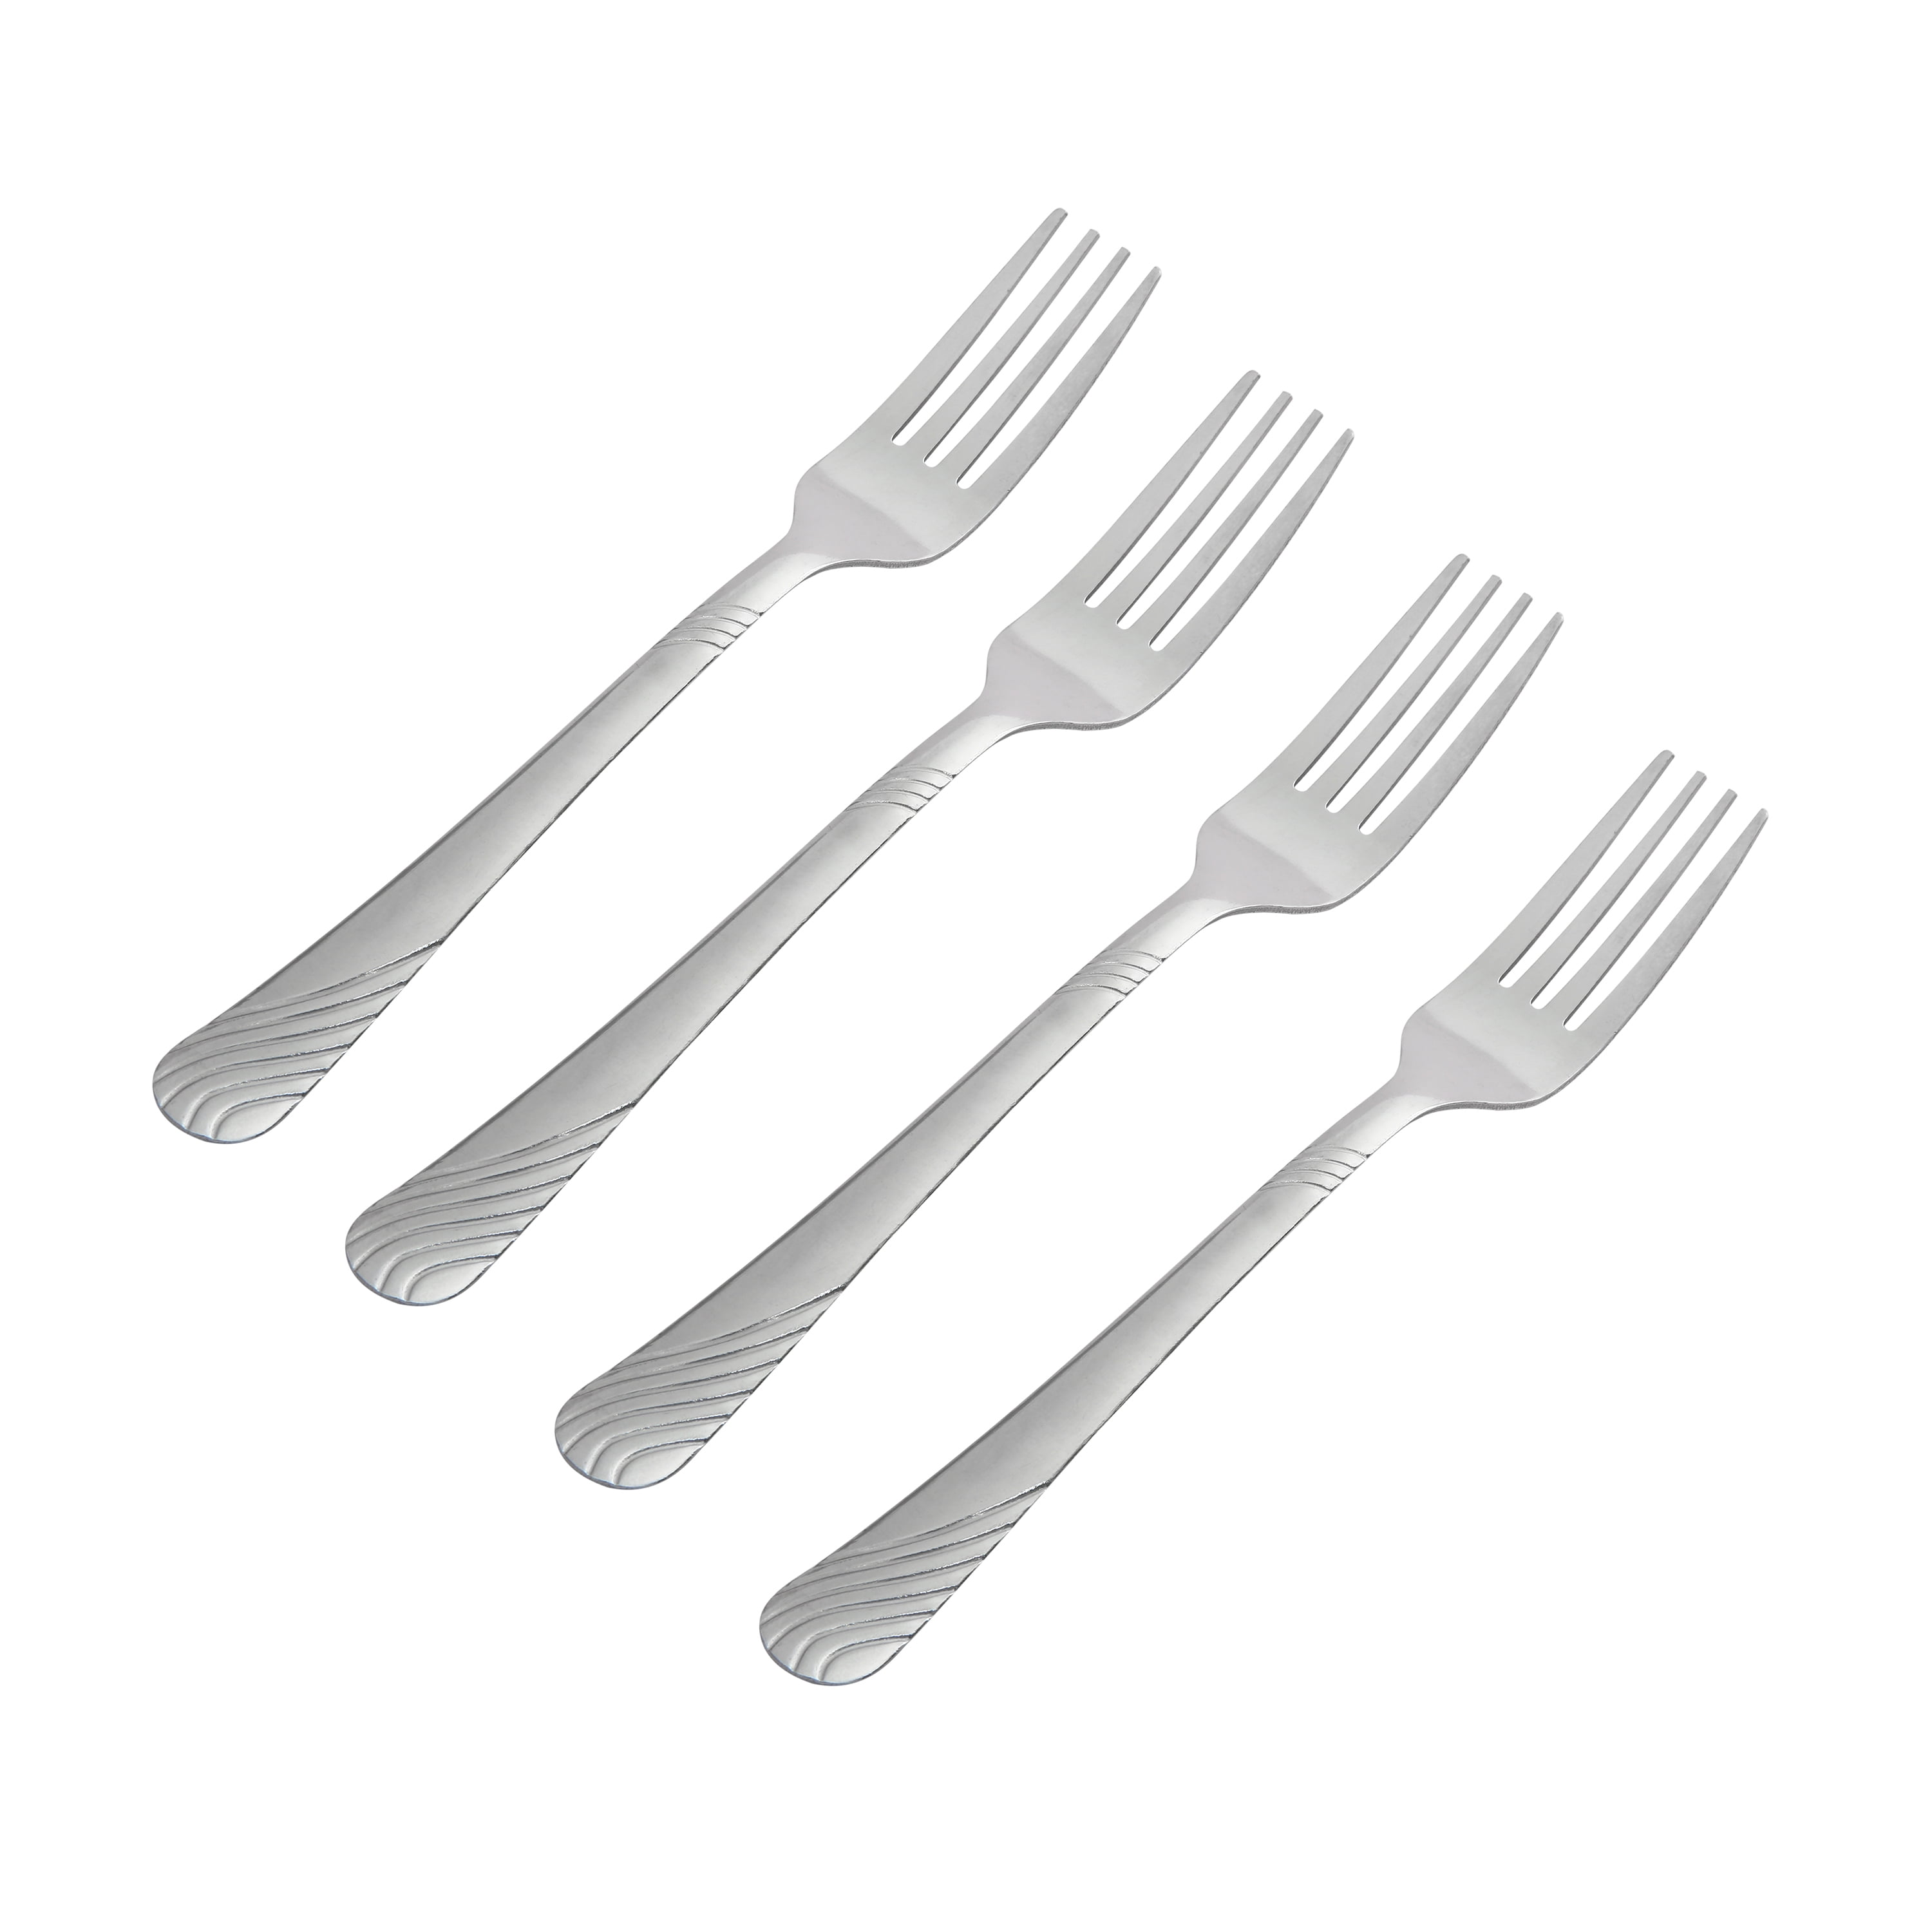 Mainstays 4-Piece Swirl Stainless Steel Dinner Knife Set, Silver Tableware